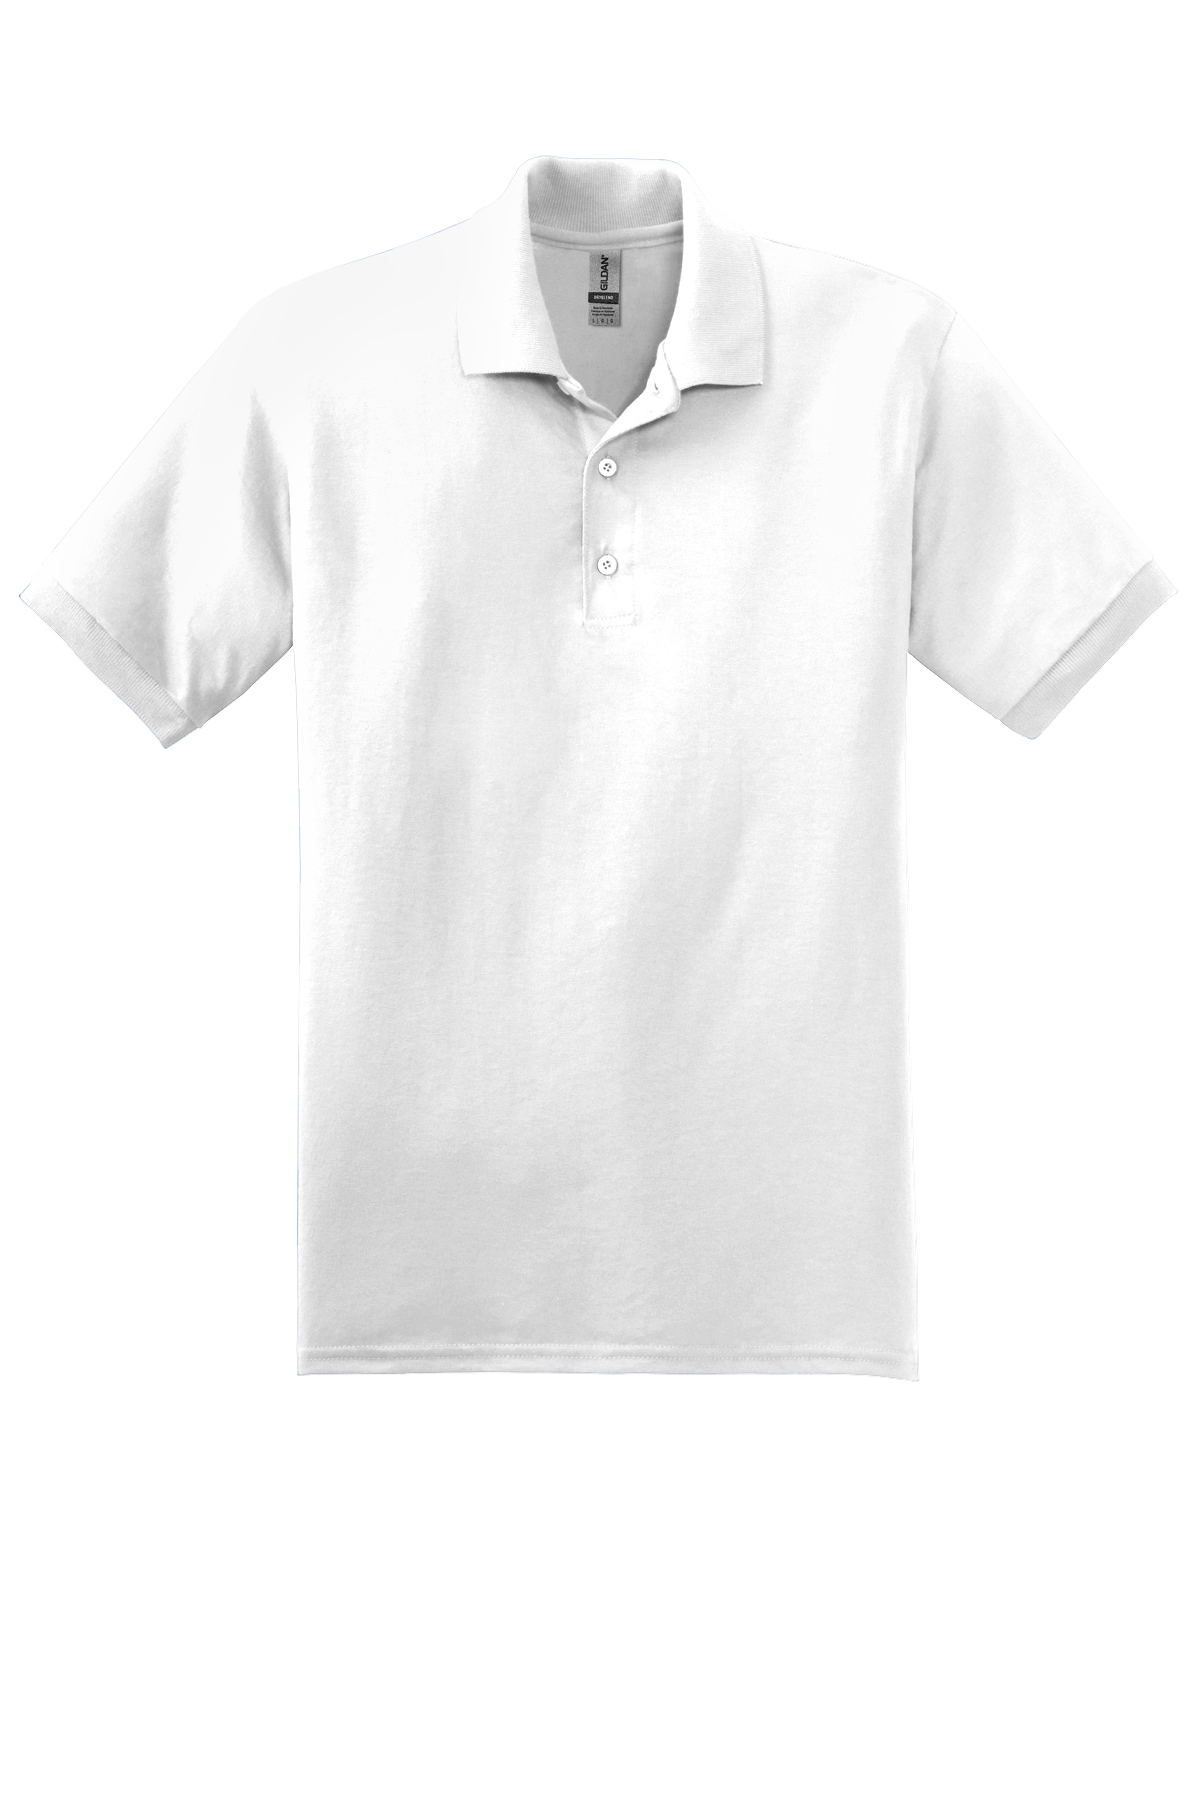 Gildan - DryBlend 6-Ounce Jersey Knit Sport Shirt | Product | Company ...